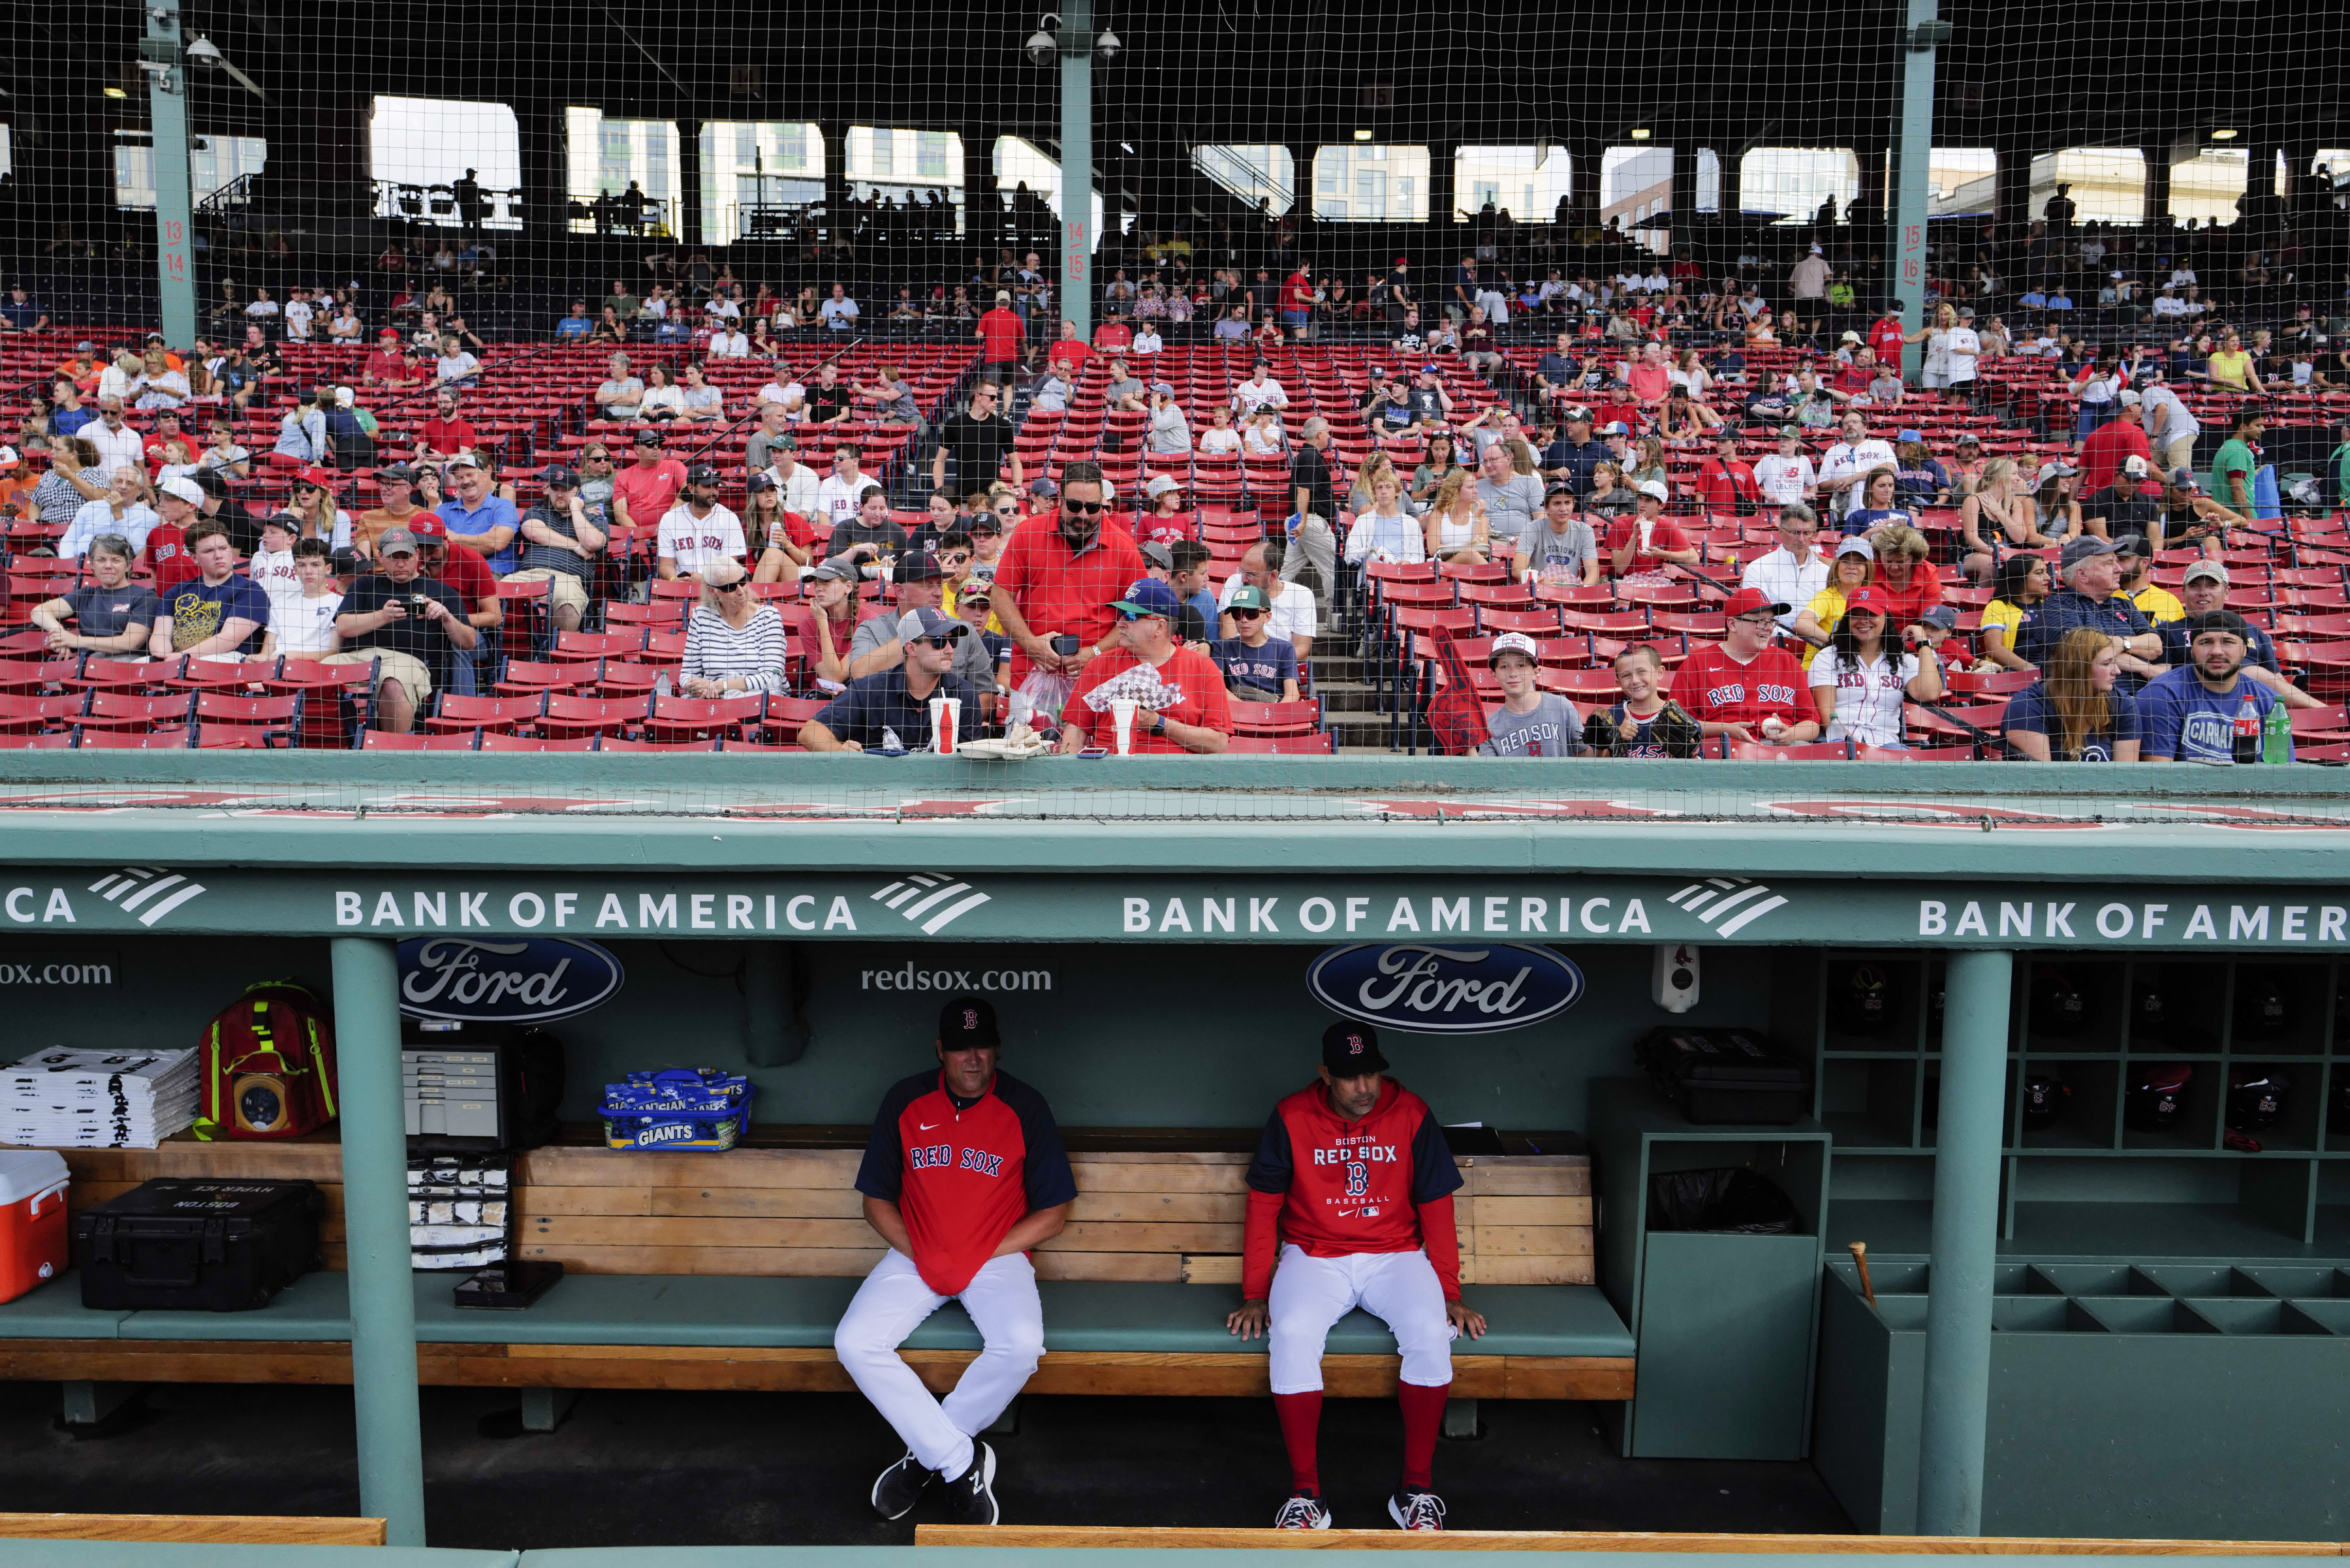 Boston, Massachusetts, USA. April 19, 2012. Dozens of Red Sox fans